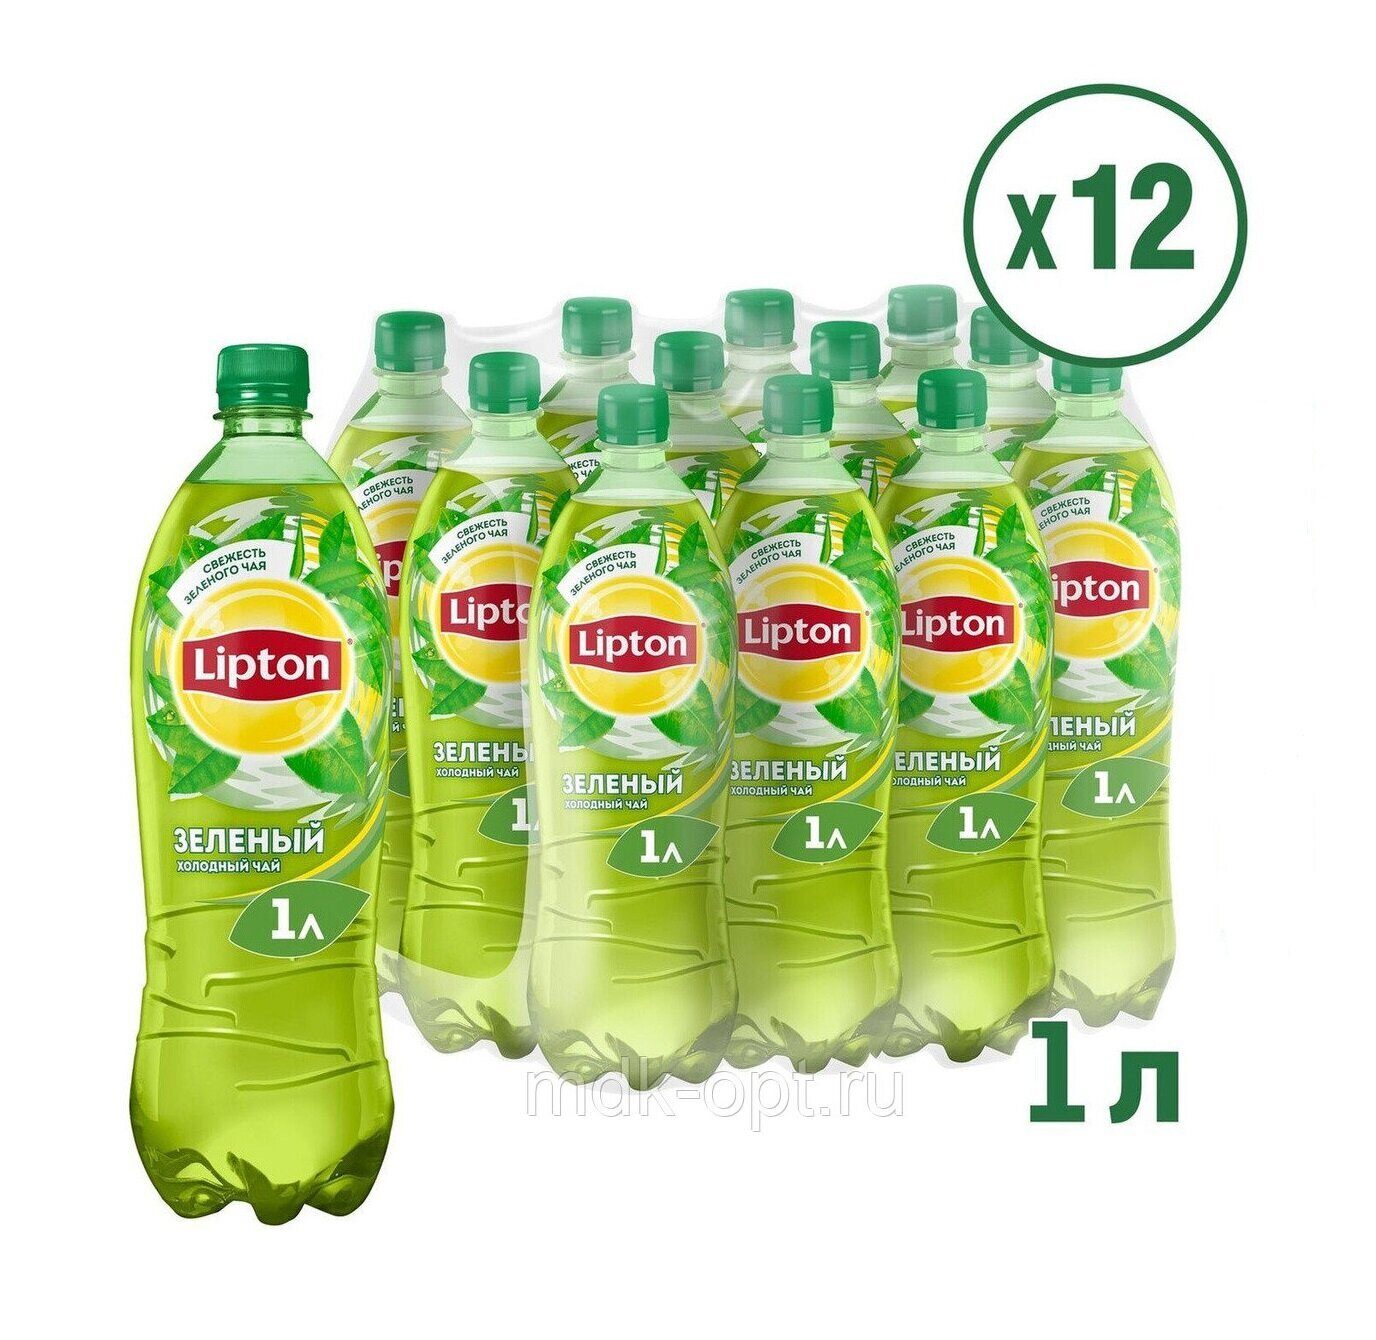 Бутылка зеленого липтона. Липтон зеленый 1л. Липтон холодный чай зеленый 0.5. Липтон 0,5 зеленый. Чай Липтон зеленый чай 0,5.